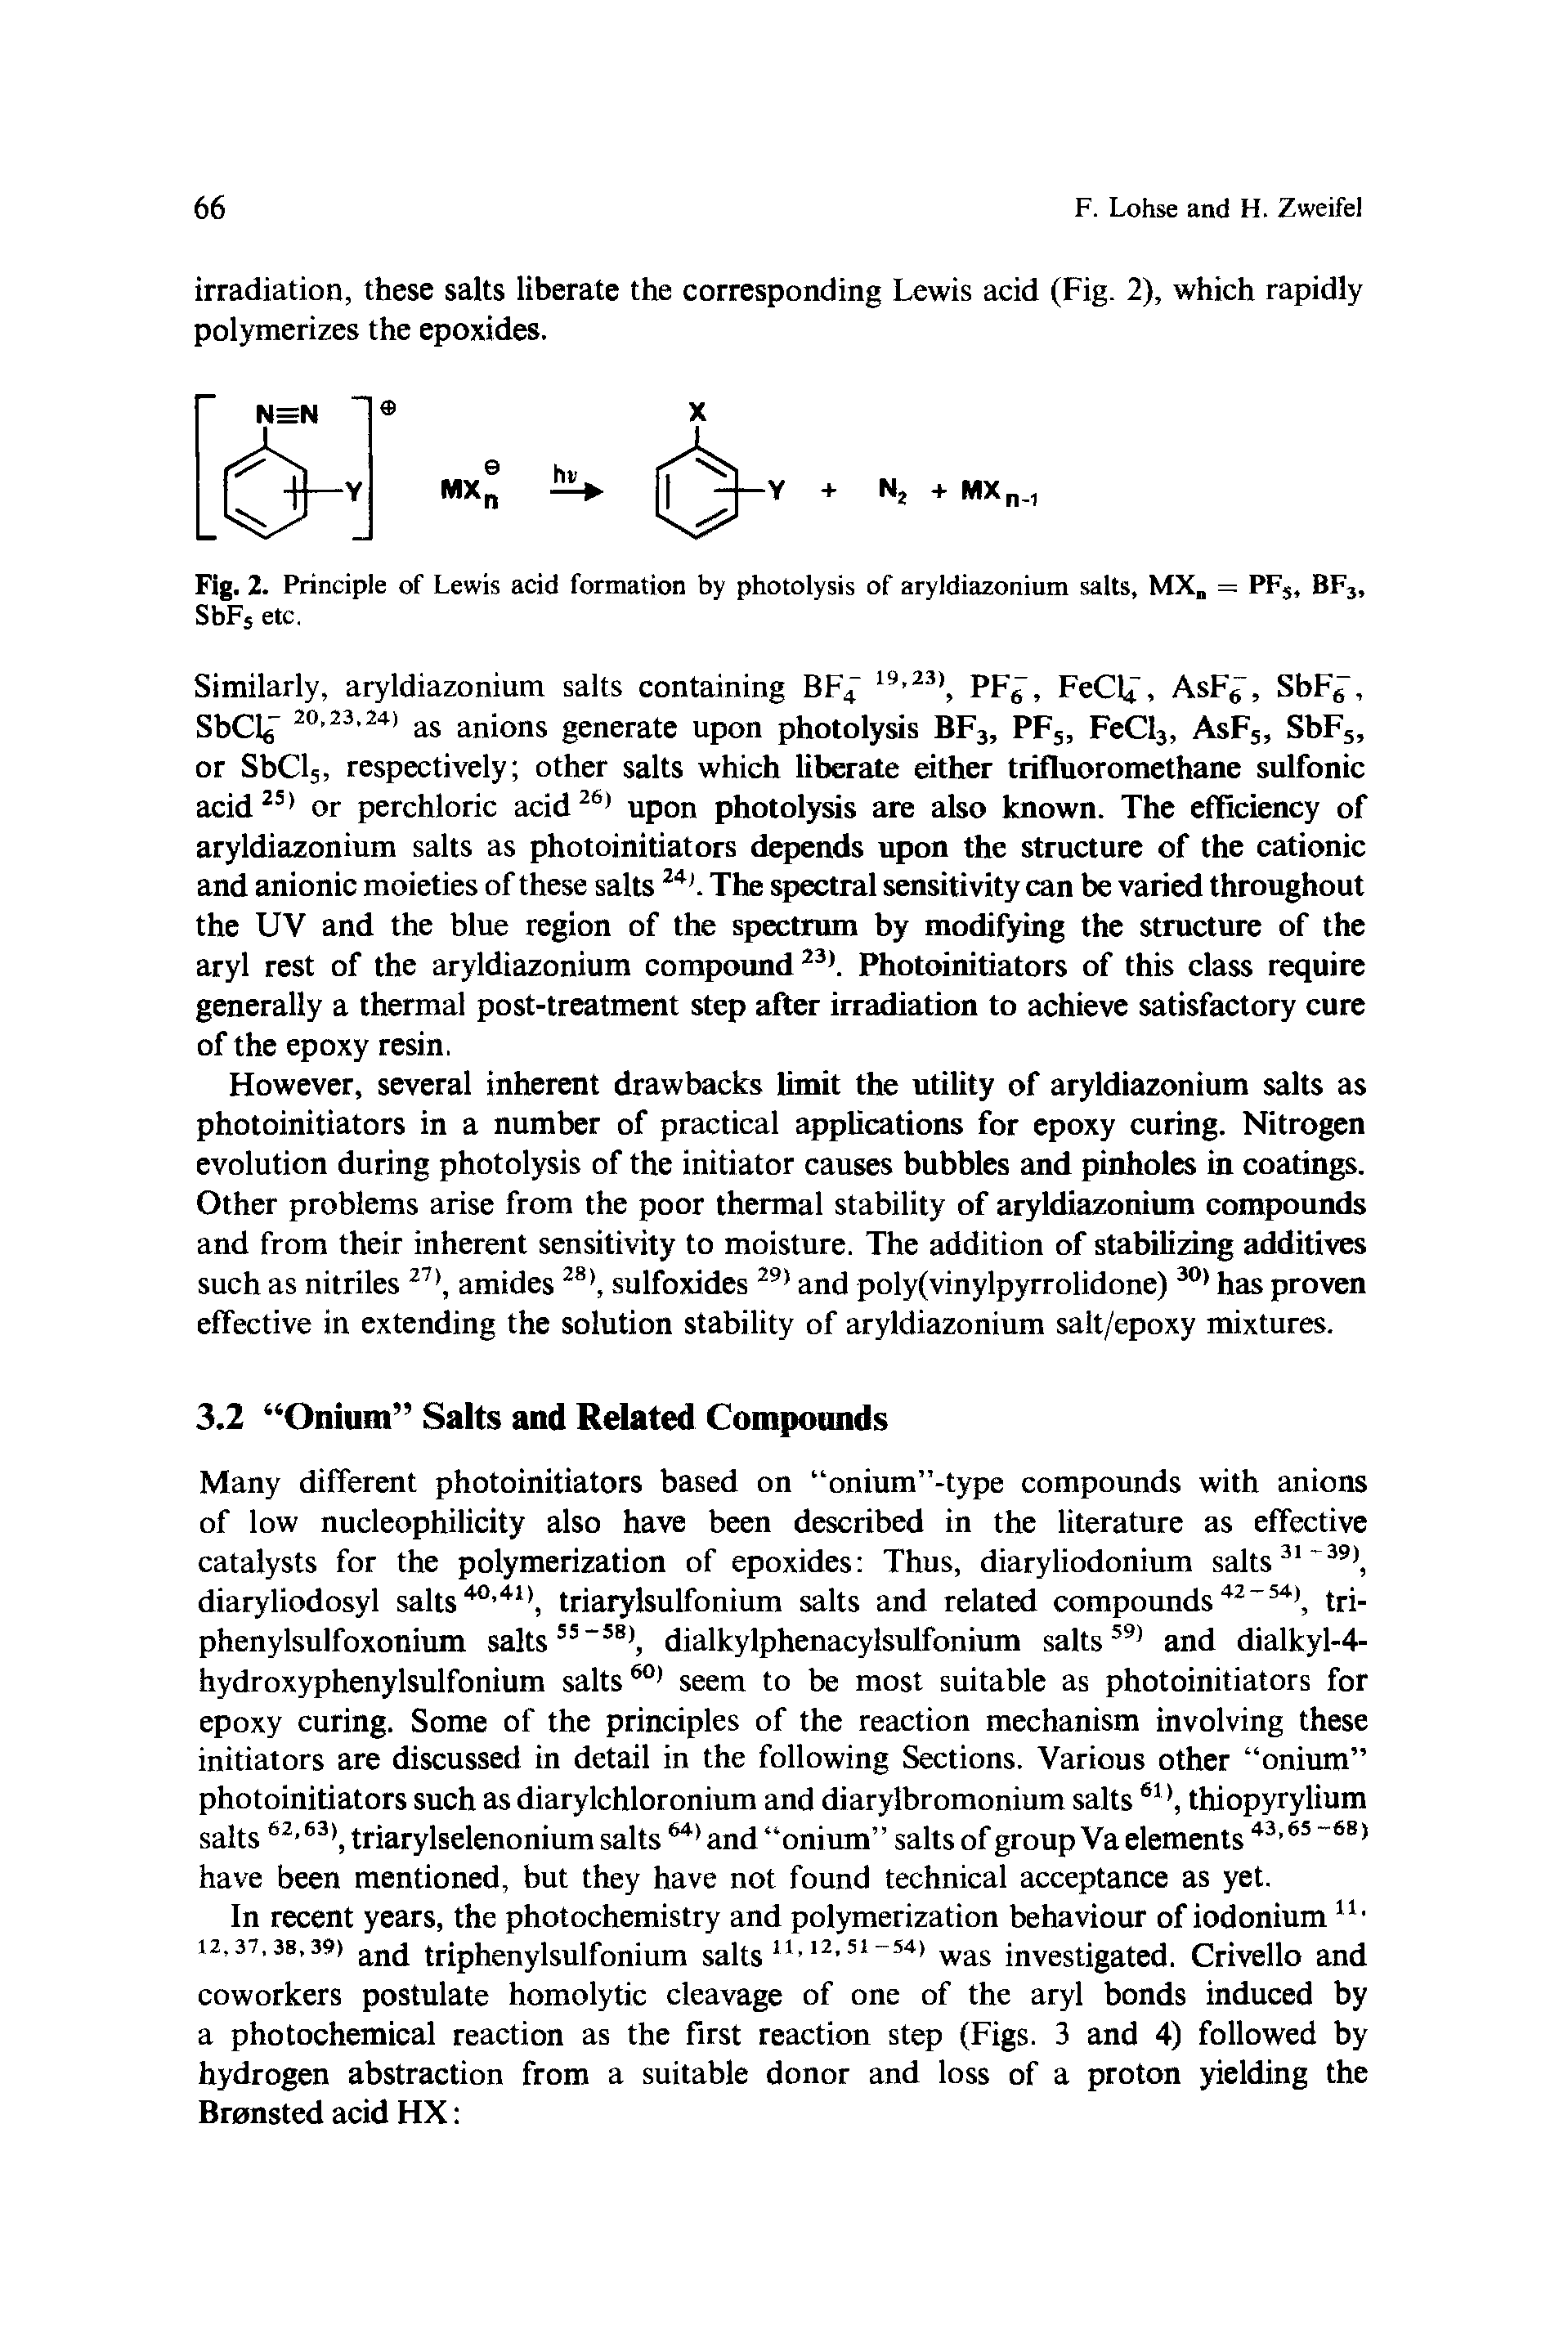 Fig. 2. Principle of Lewis acid formation by photolysis of aryldiazonium salts, MX = PFj, BFj, SbFs etc.